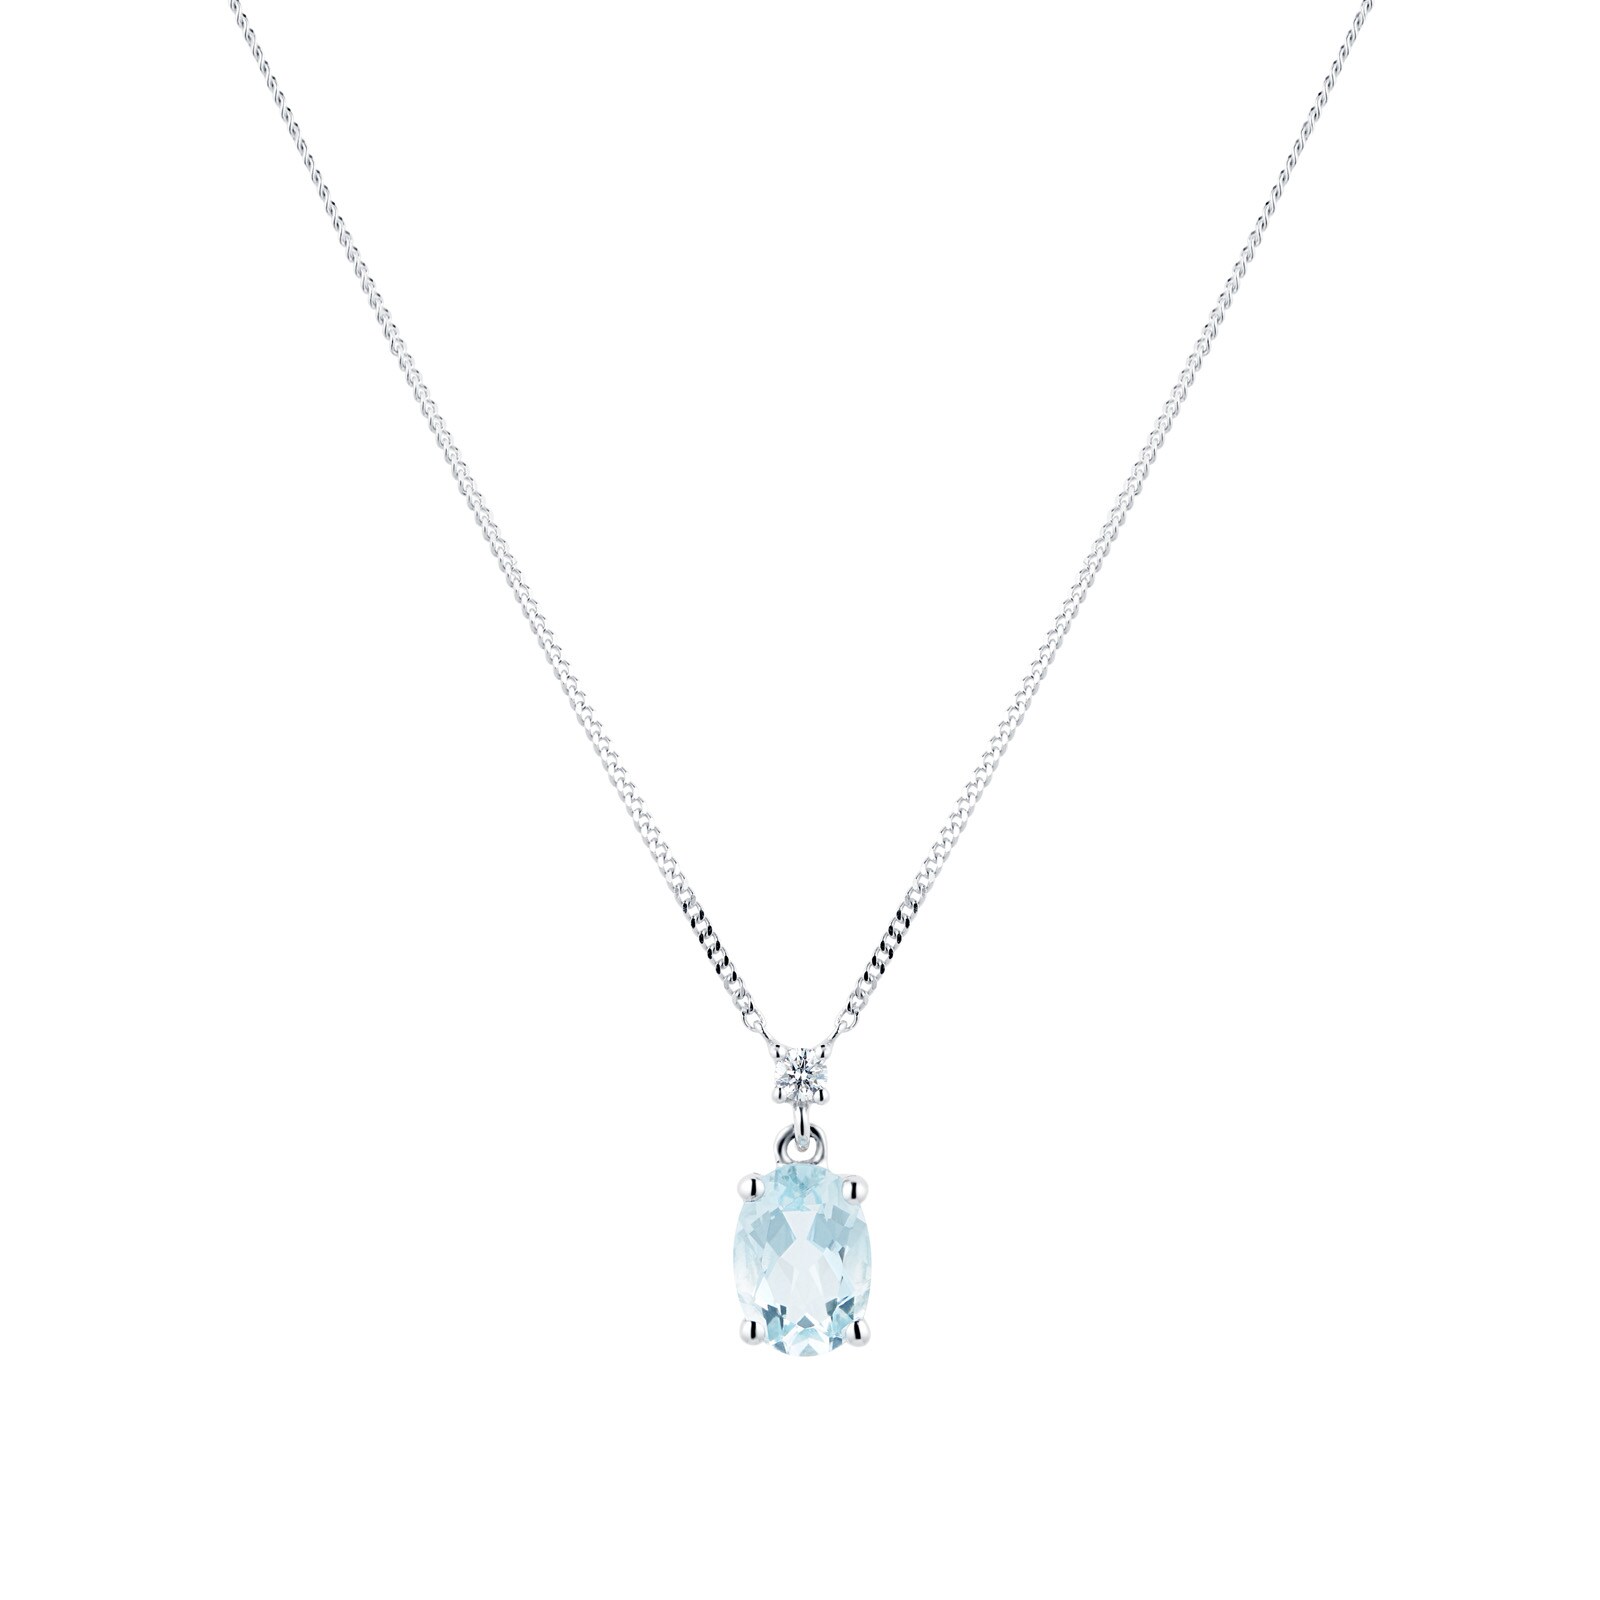 55cts Aquamarine and Diamond Pendant Necklace - Jewellery Discovery